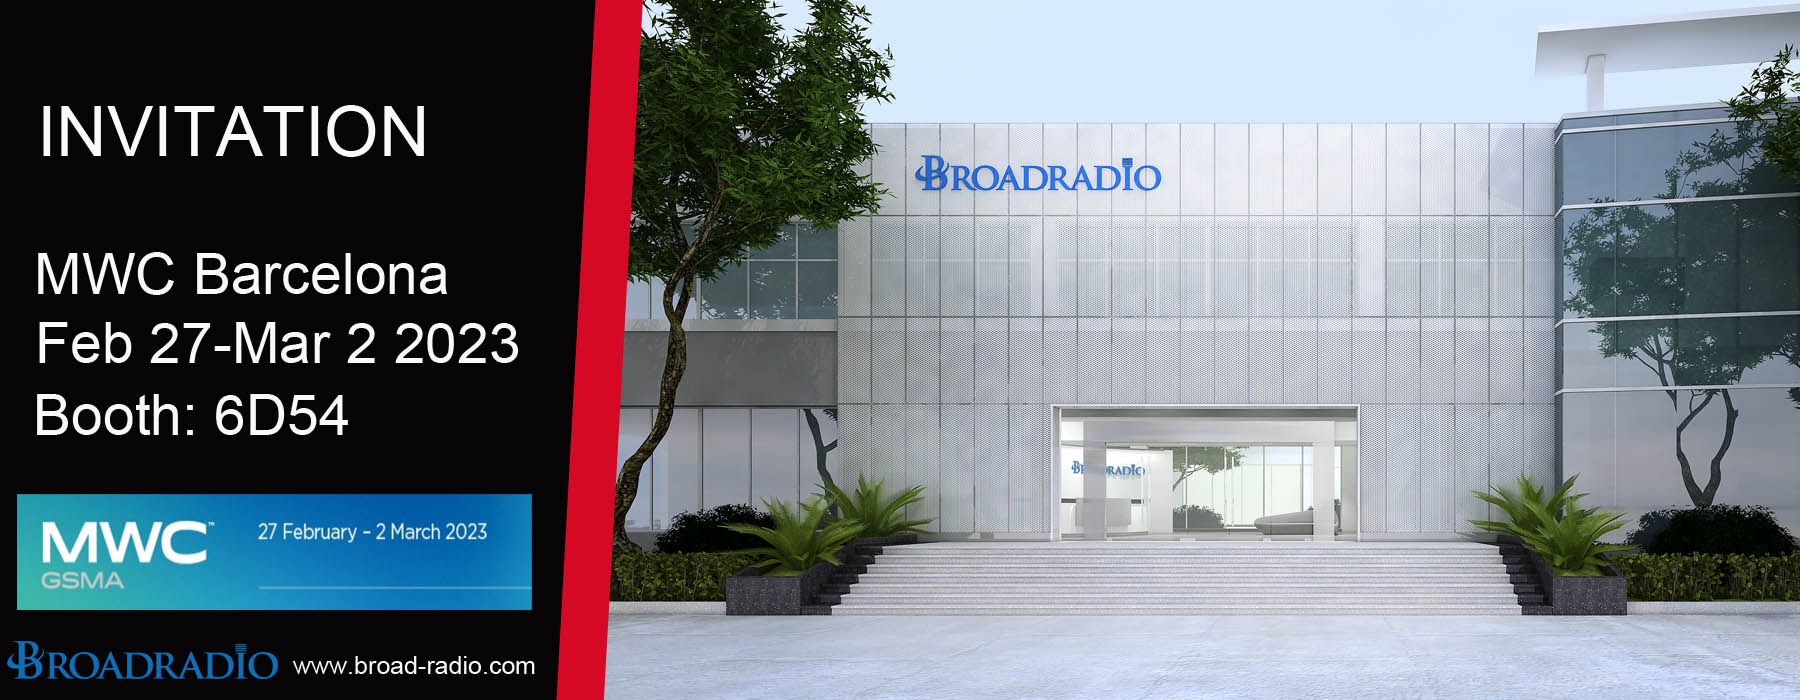 Broadradio nimmt im Februar 2023 am MWC Barcelona teil